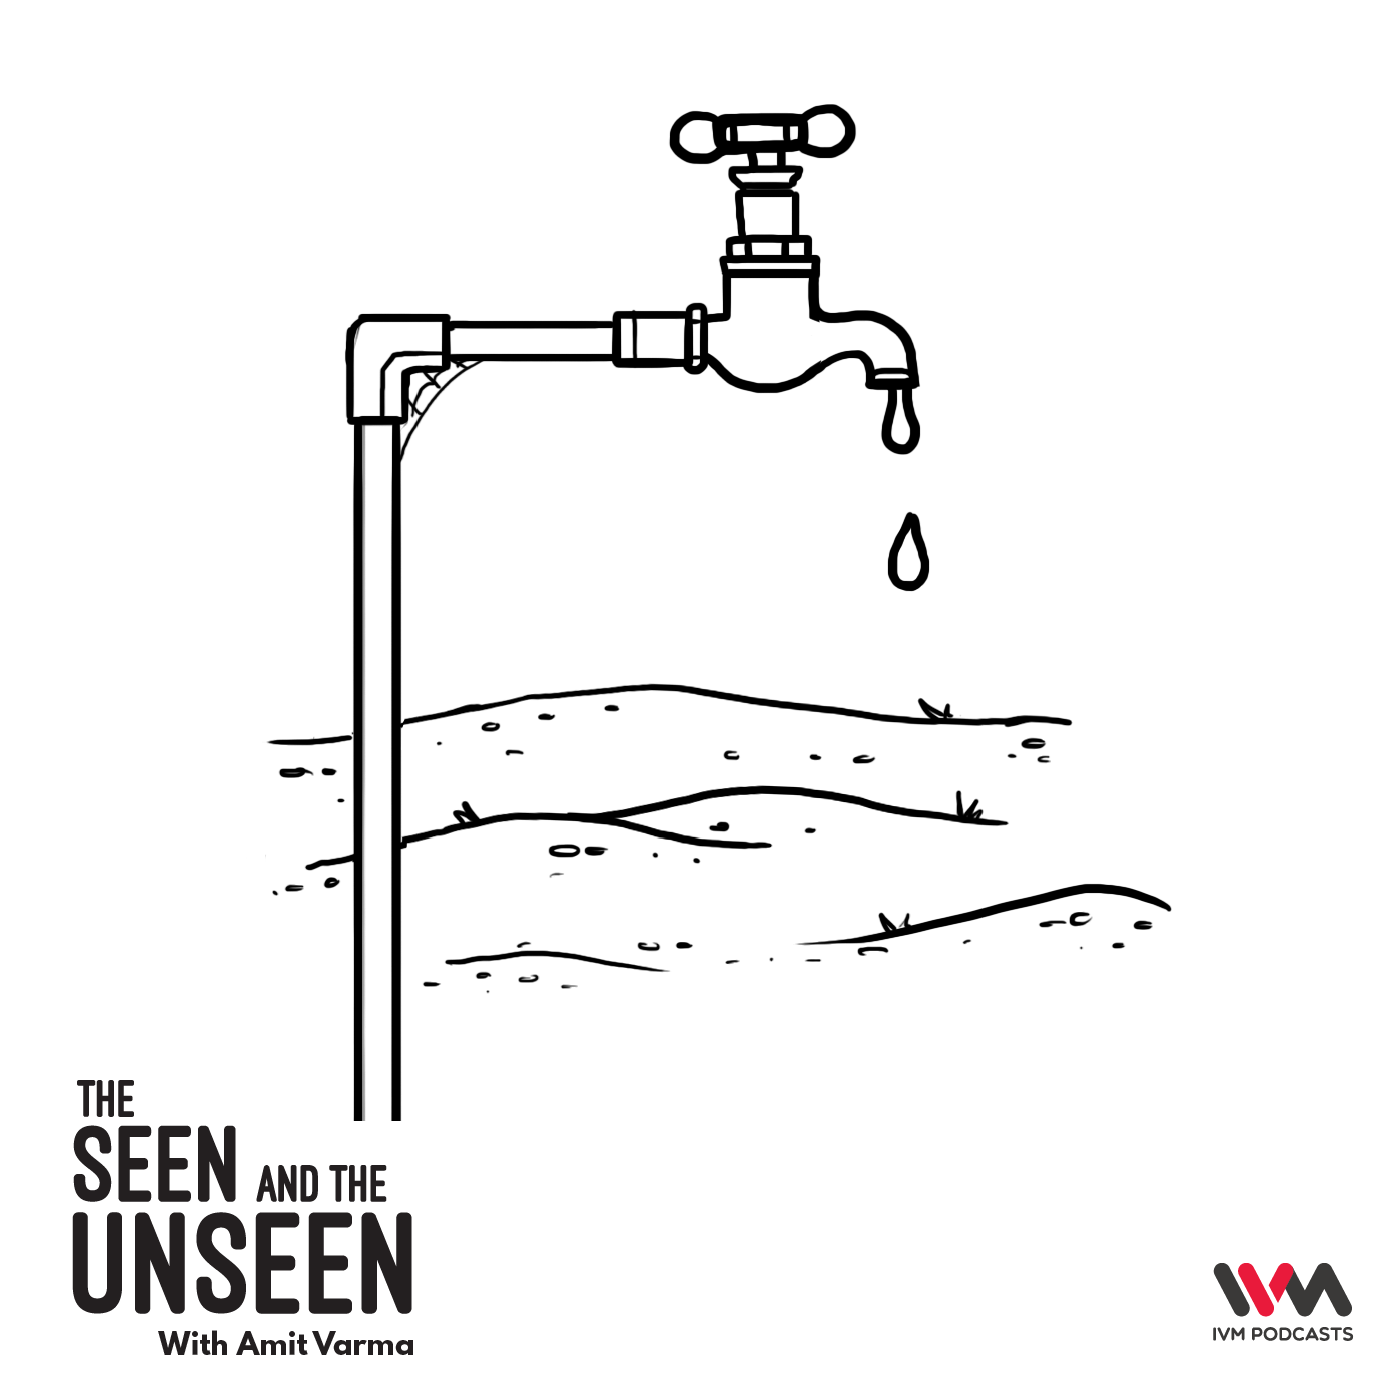 India's Water Crisis